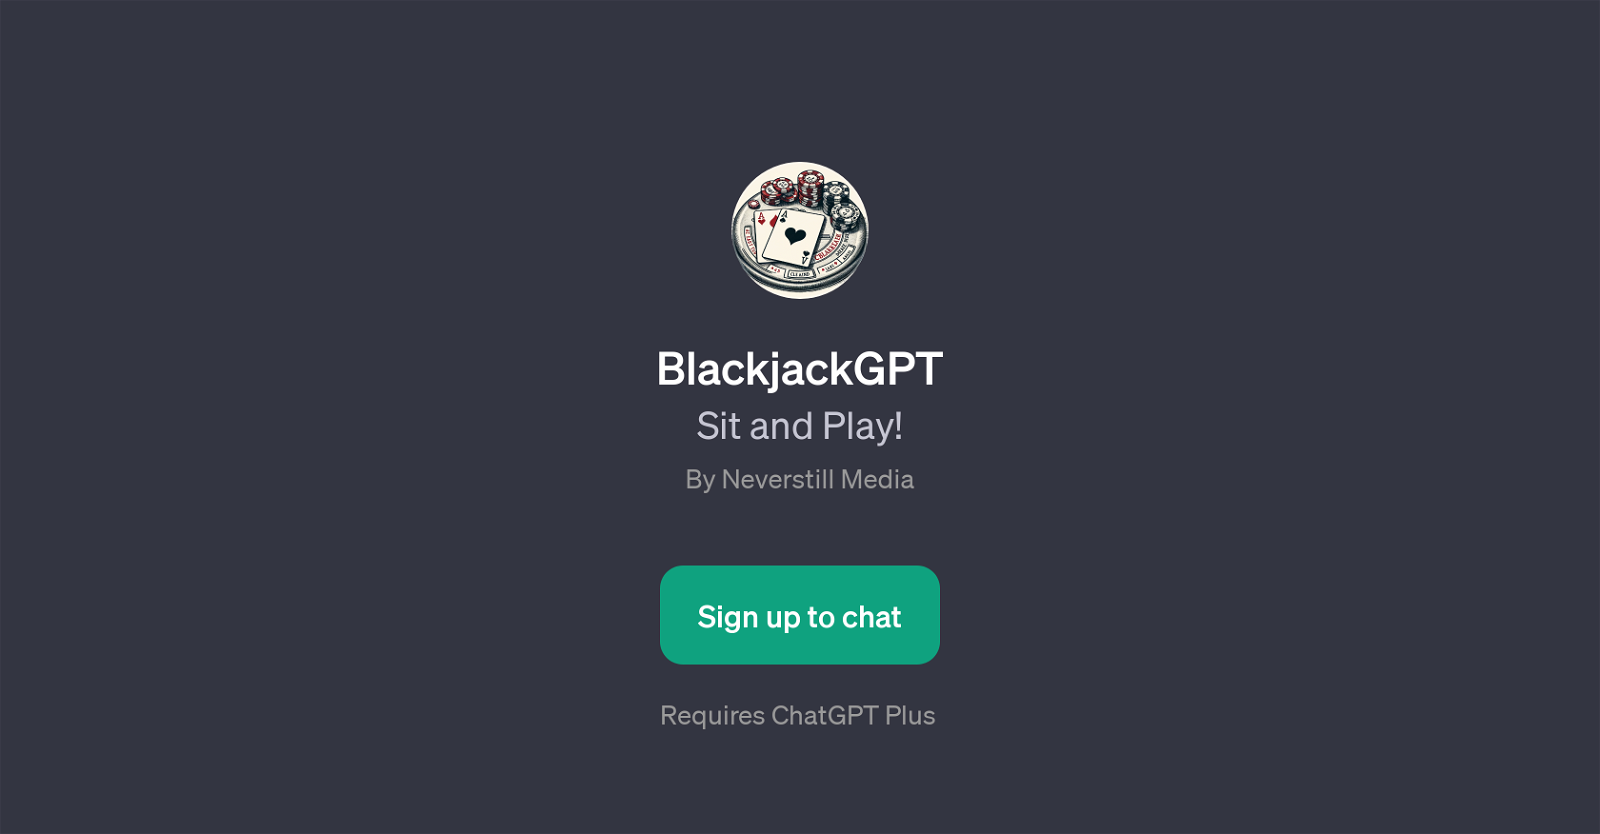 BlackjackGPT website